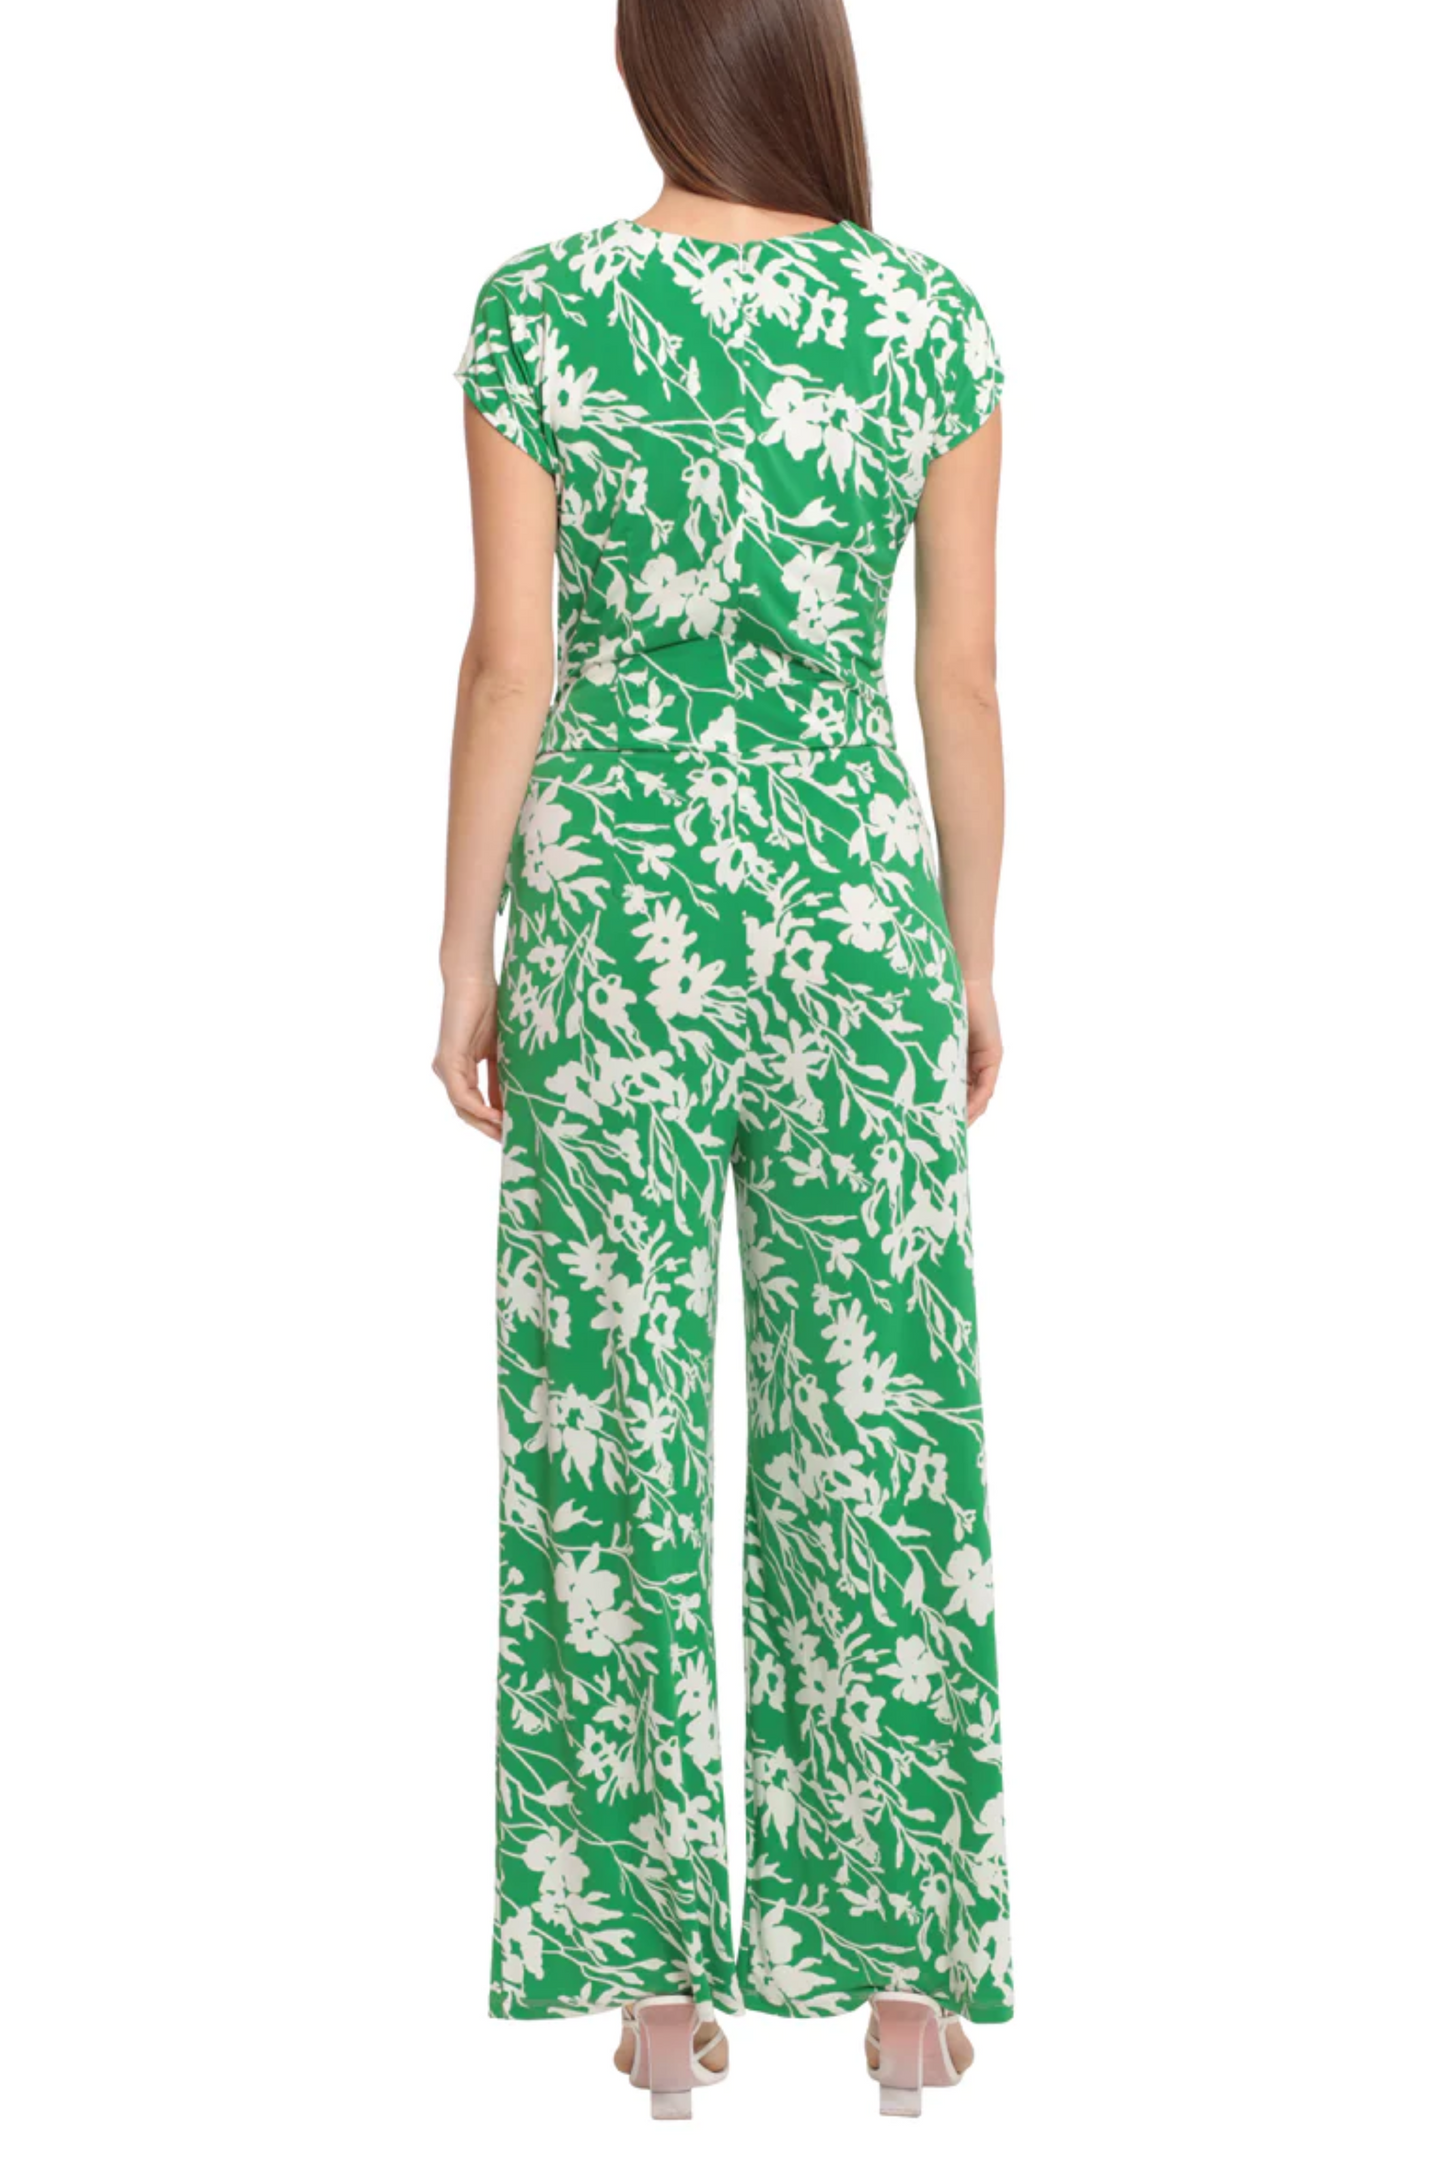 London Times Short Sleeve Side-Tie Floral Jumpsuit